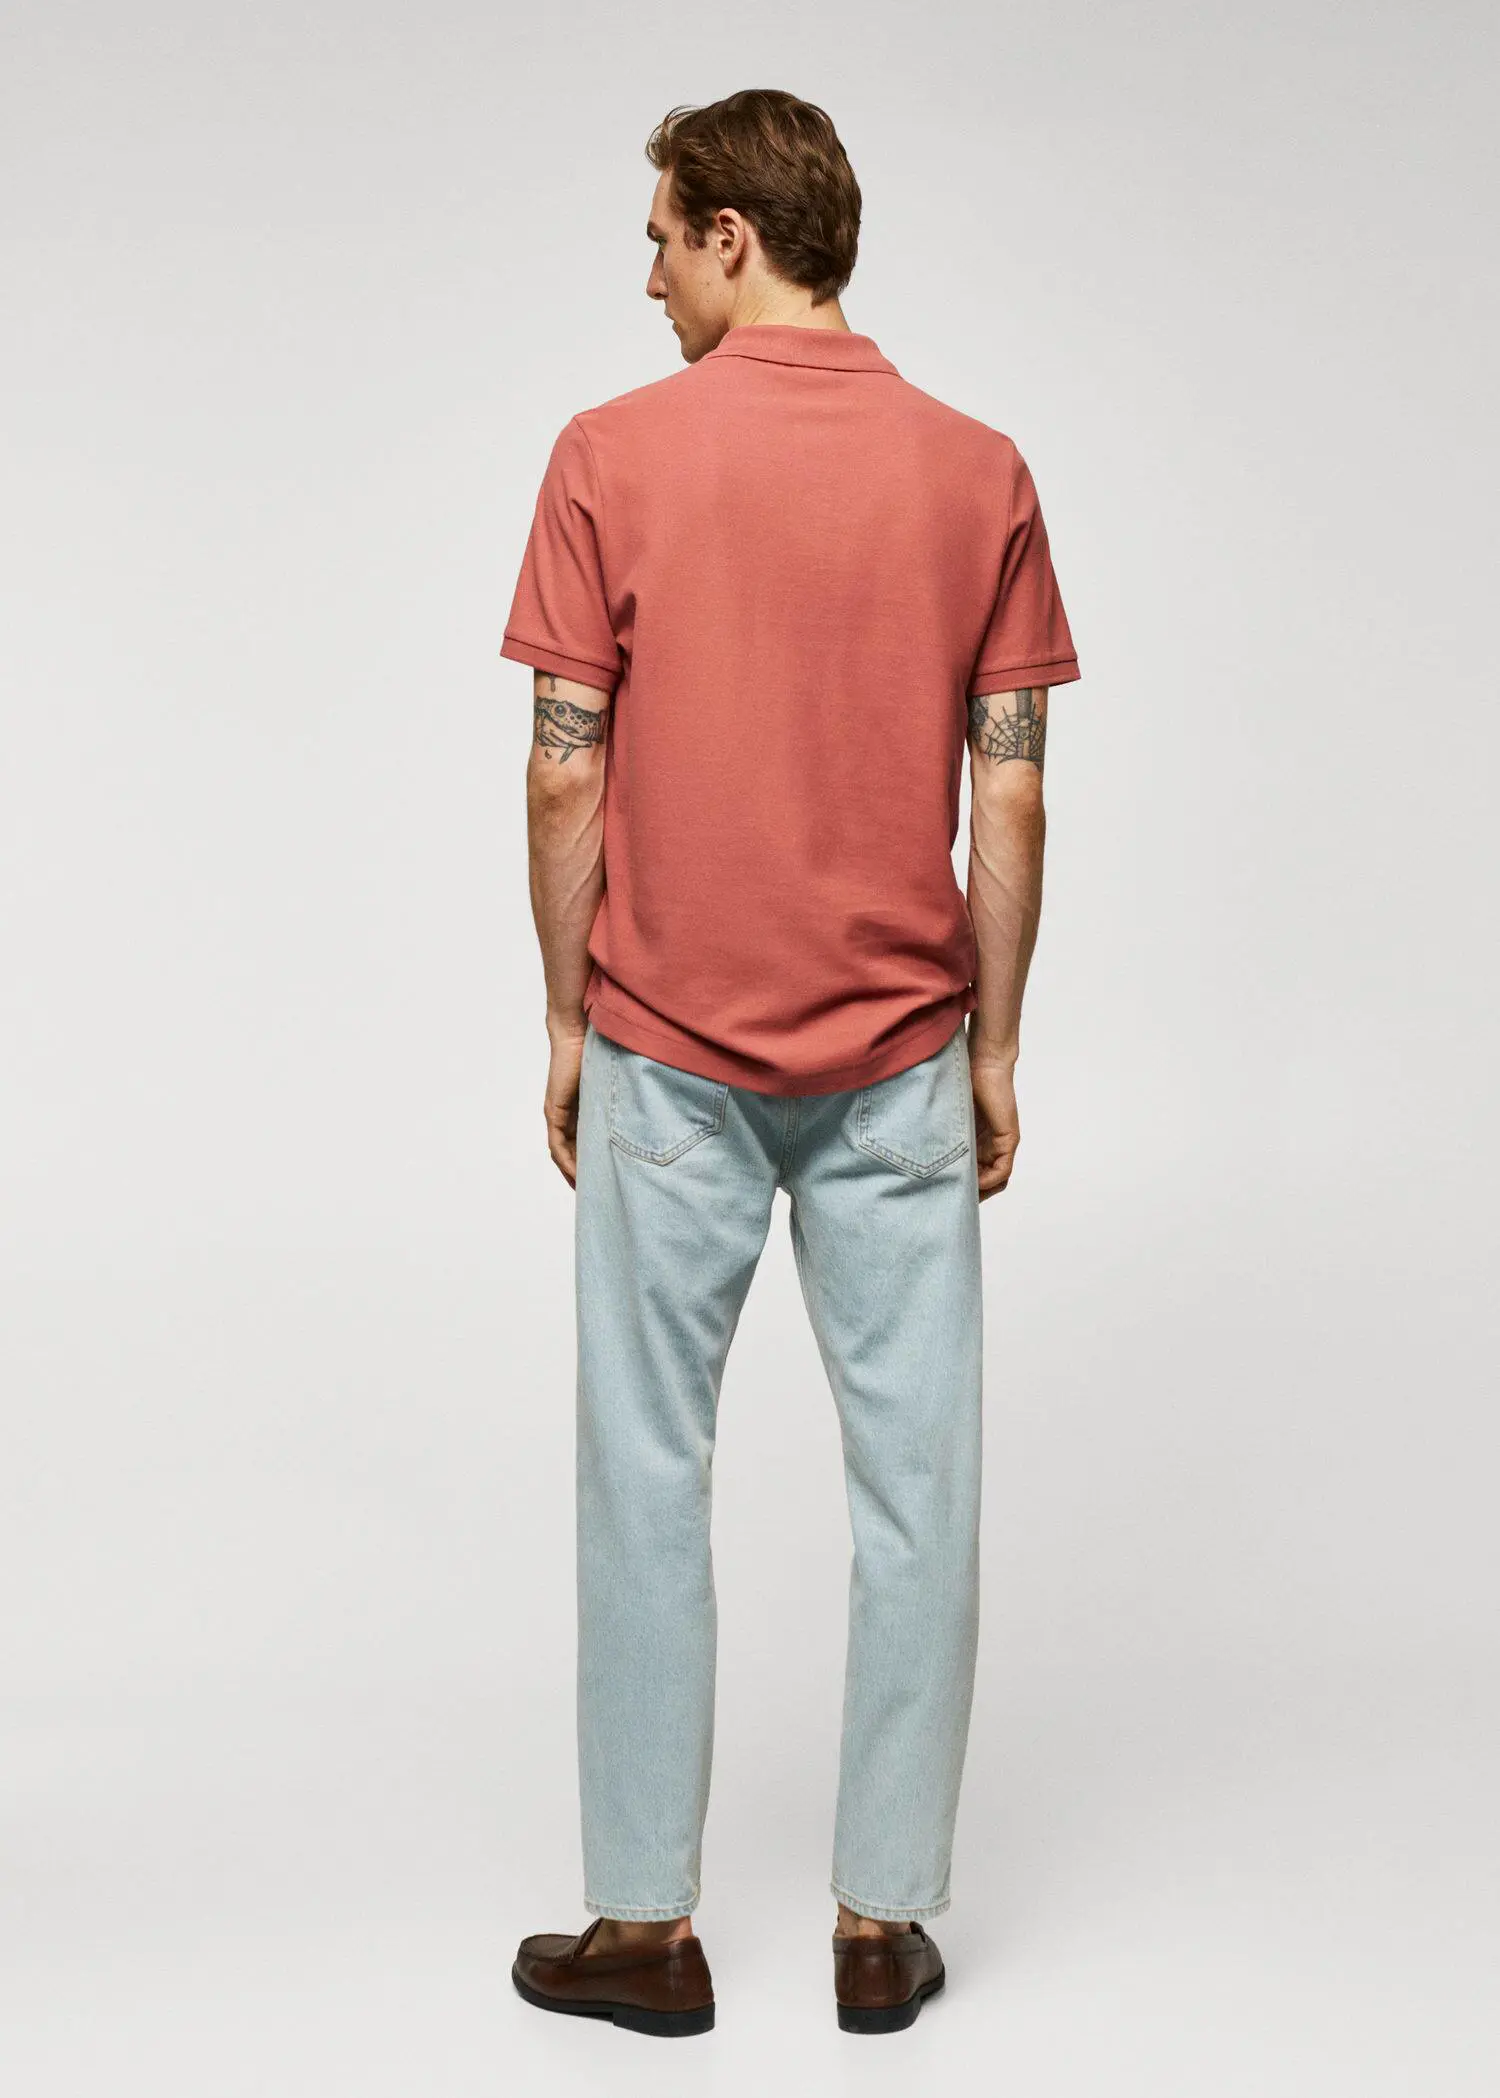 Mango 100% cotton pique polo shirt. a man wearing a red shirt and blue pants. 